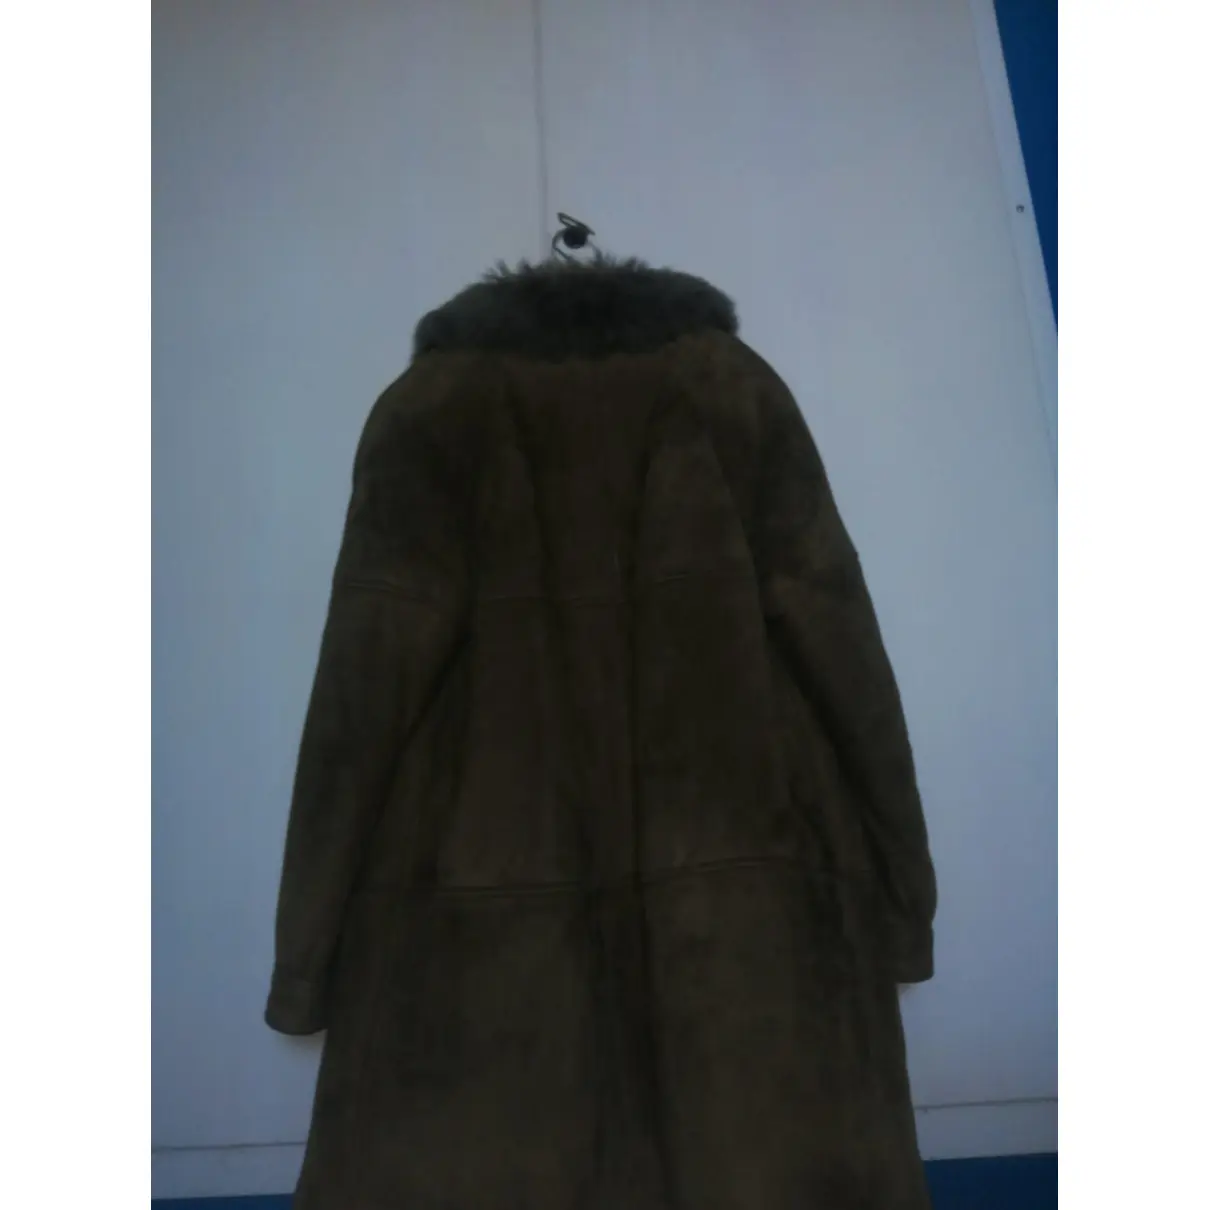 Buy Shearling Shearling coat online